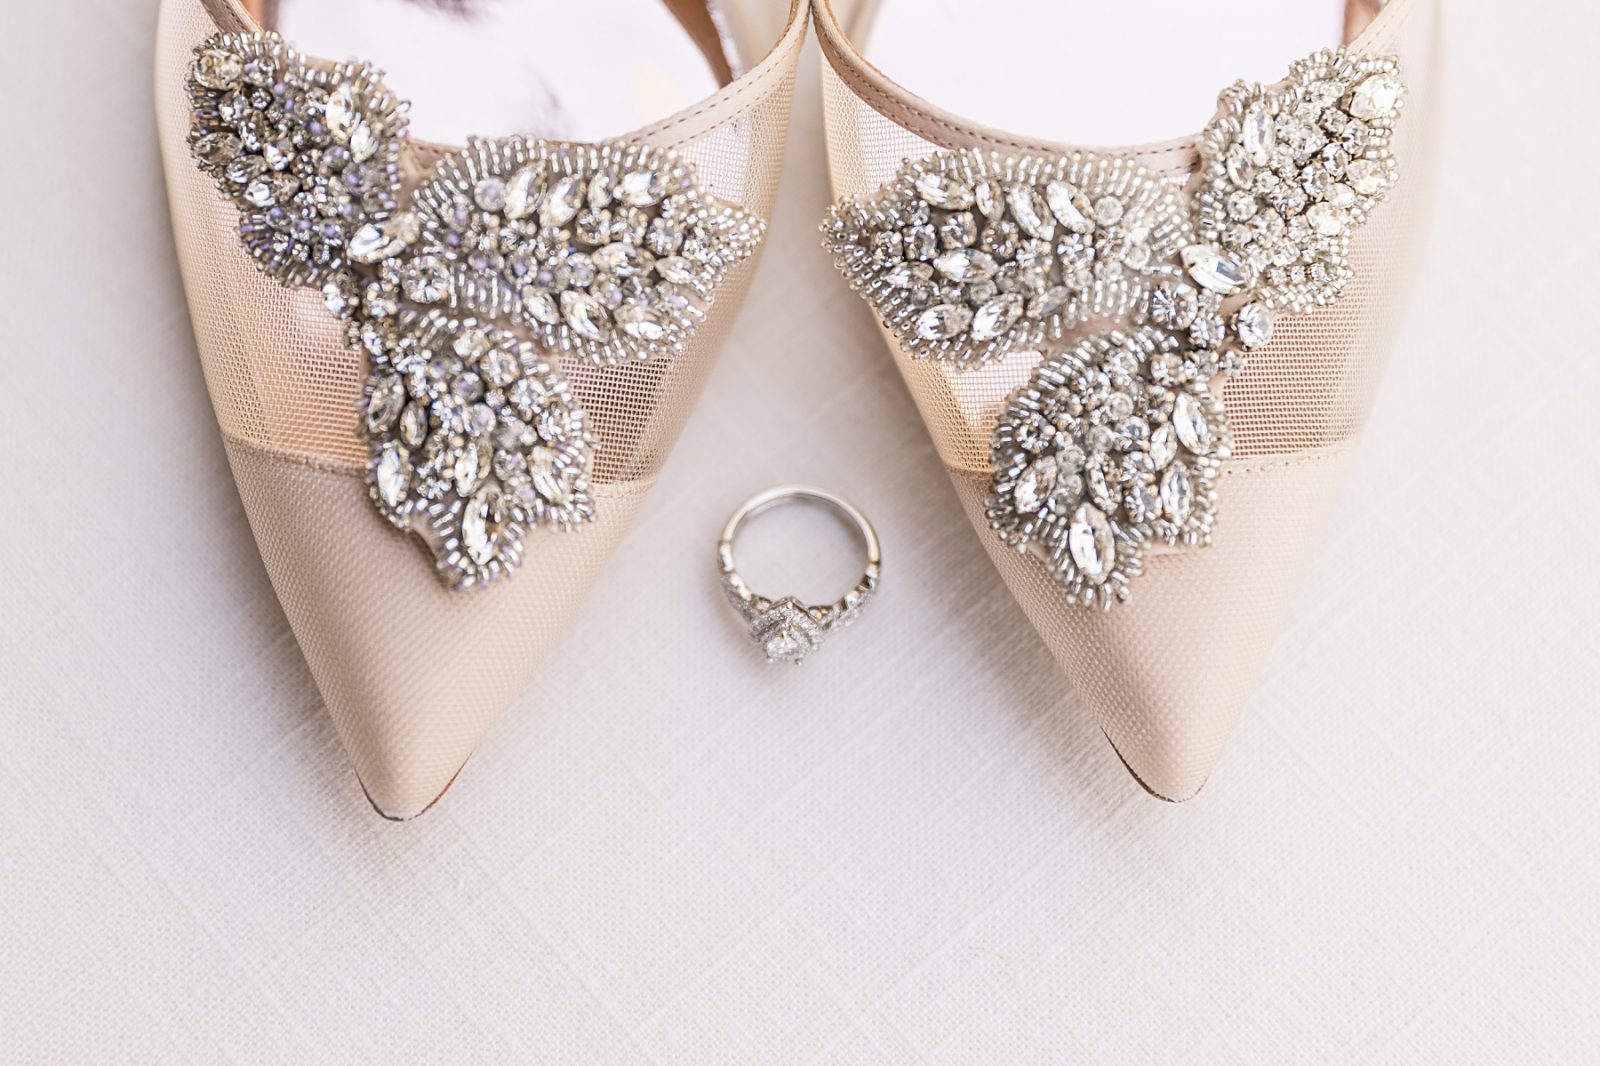 Wedding photography by Diana Gramlich, Badgley Mischka beige birdal shoes with rhinestones and wedding ring